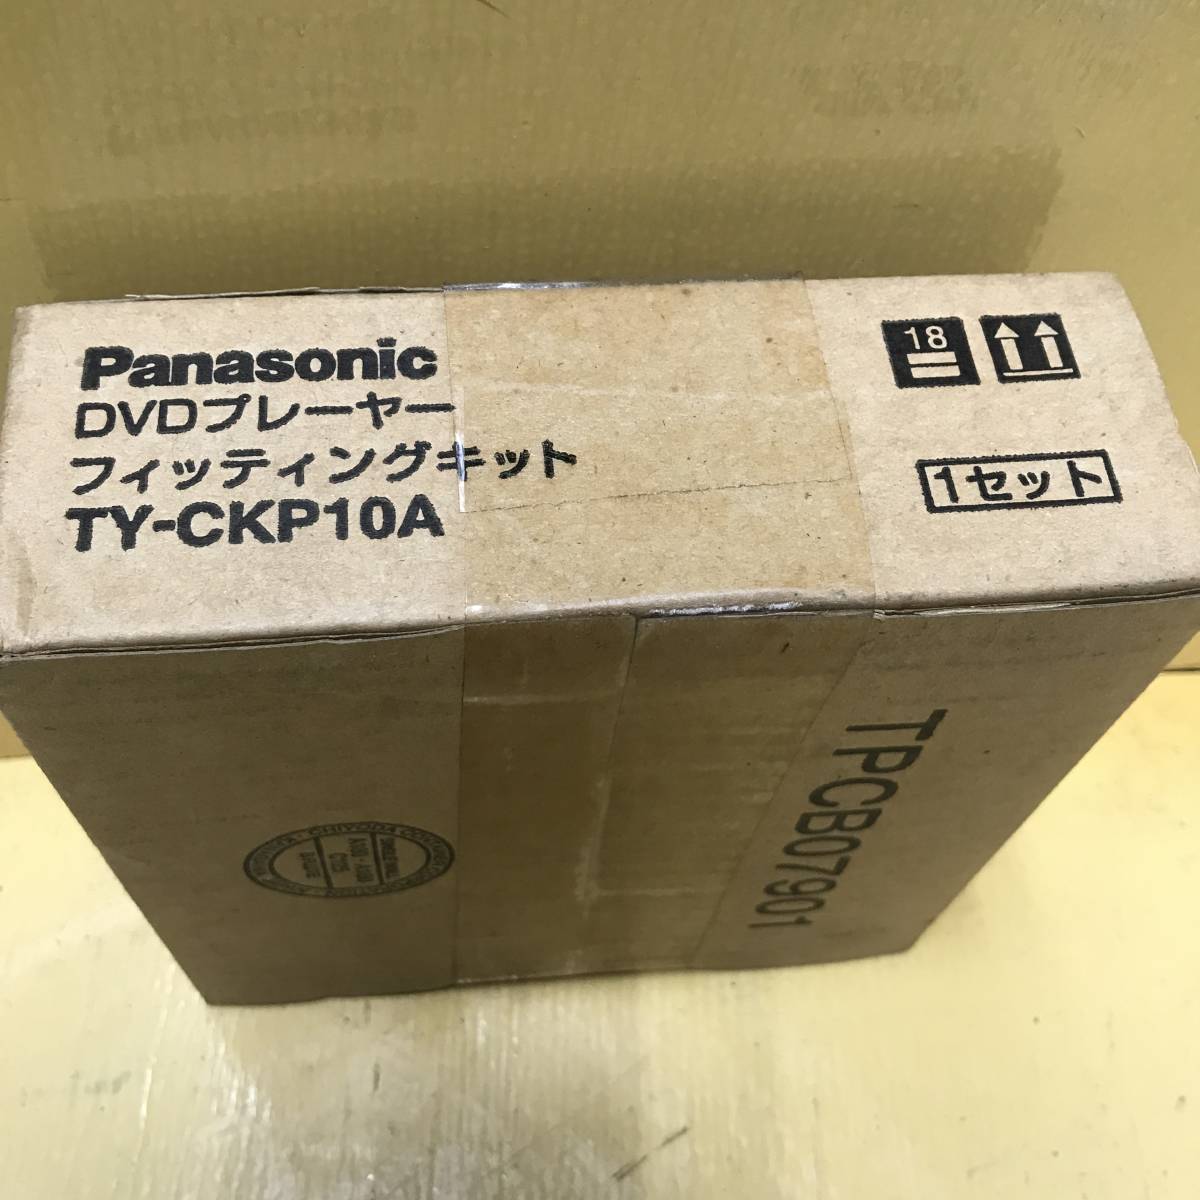 YS1450* new goods unused unopened * storage goods *Panasonic DVD player fitting kit TY-CKP10A